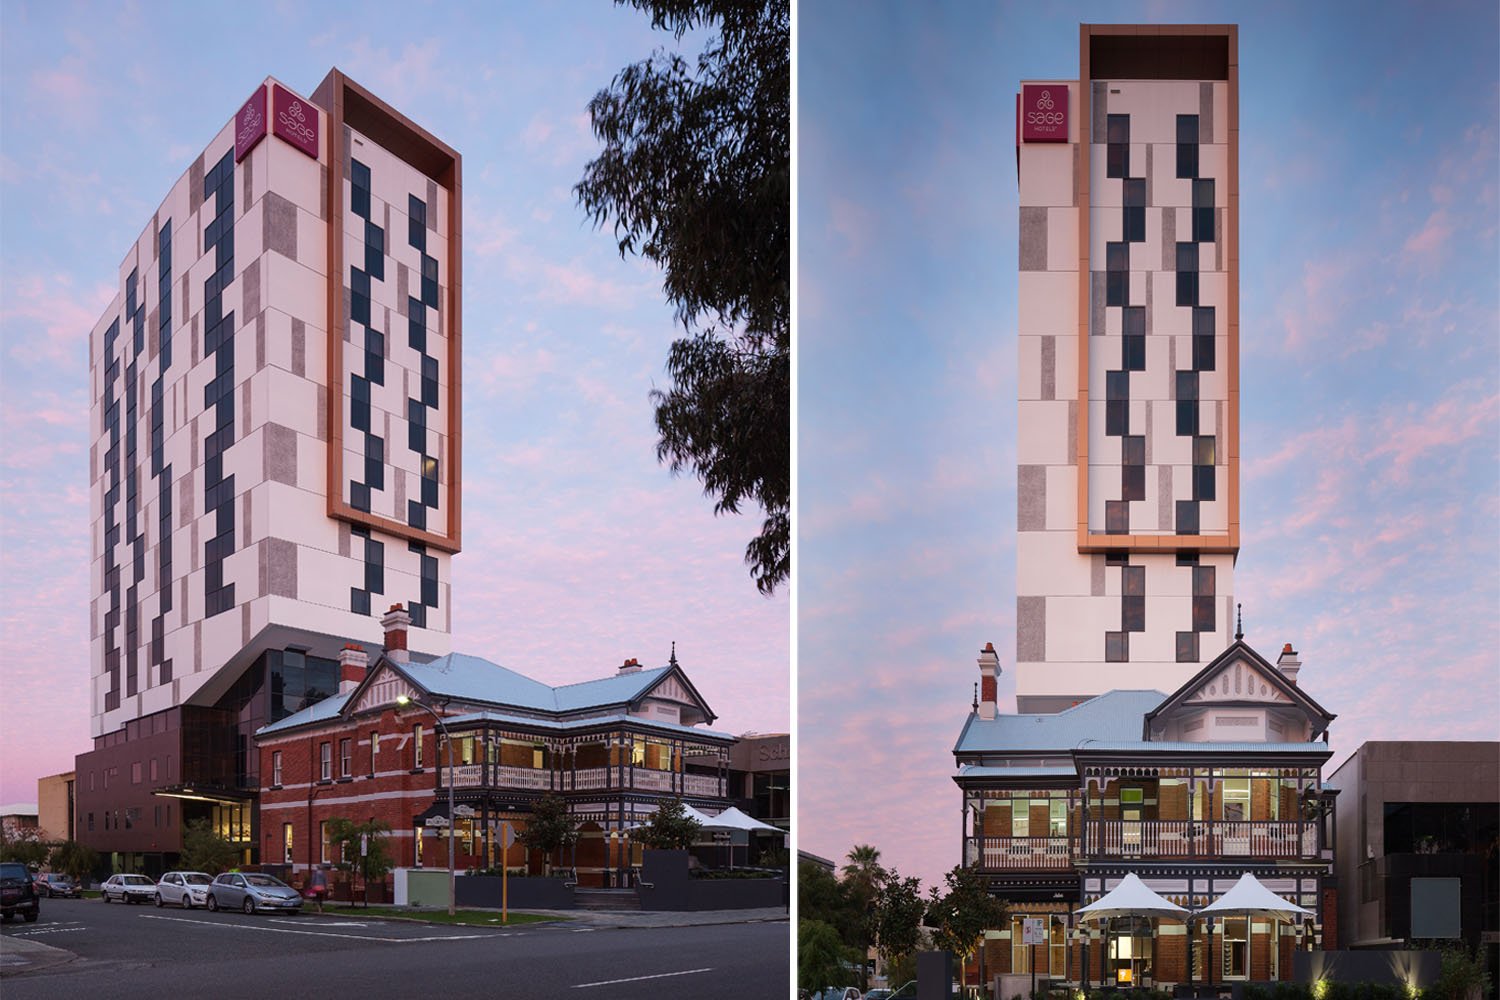 sage-hotel-west-perth-architecture-design-building-heritage-modular-exterior-facade-dusk.jpg